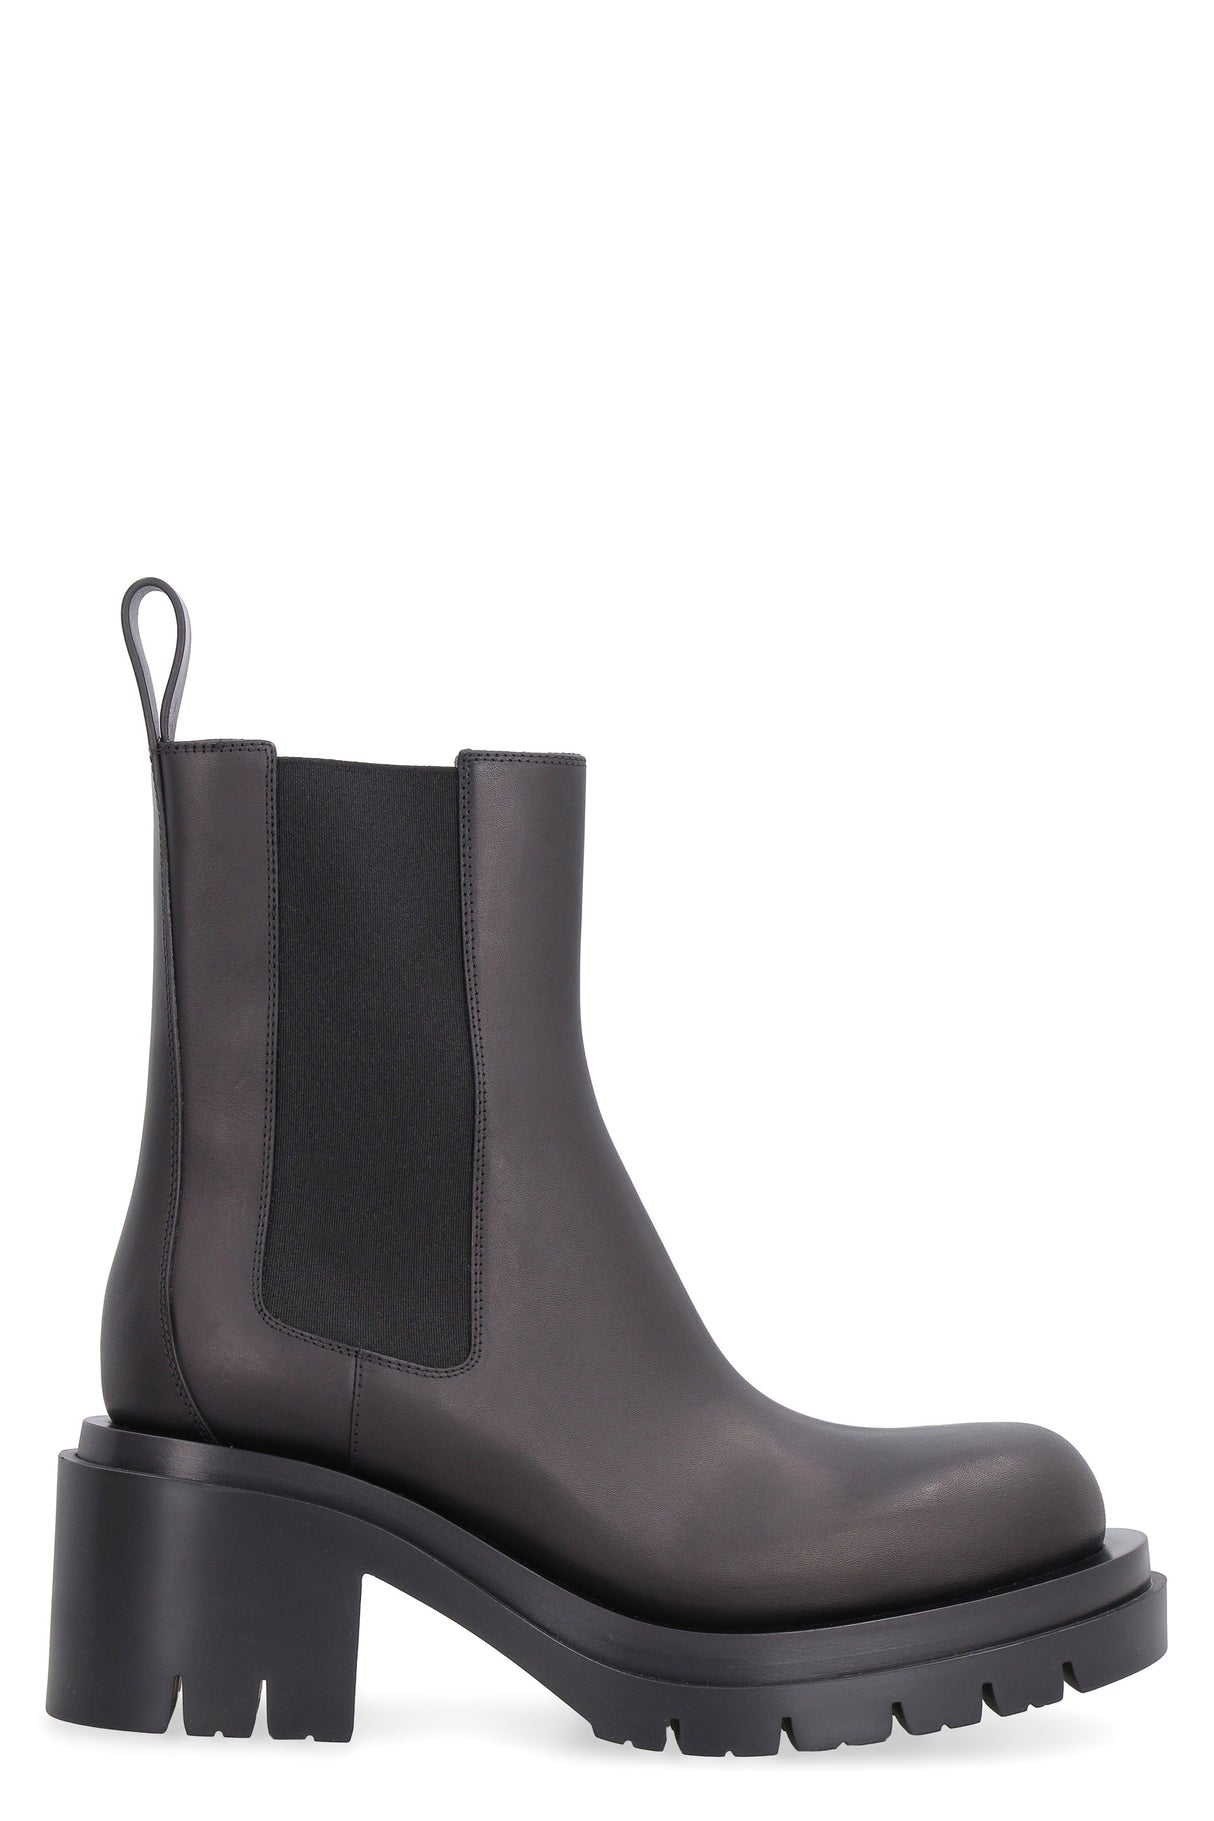 BOTTEGA VENETA Black Lug Leather Boots for Women - FW21